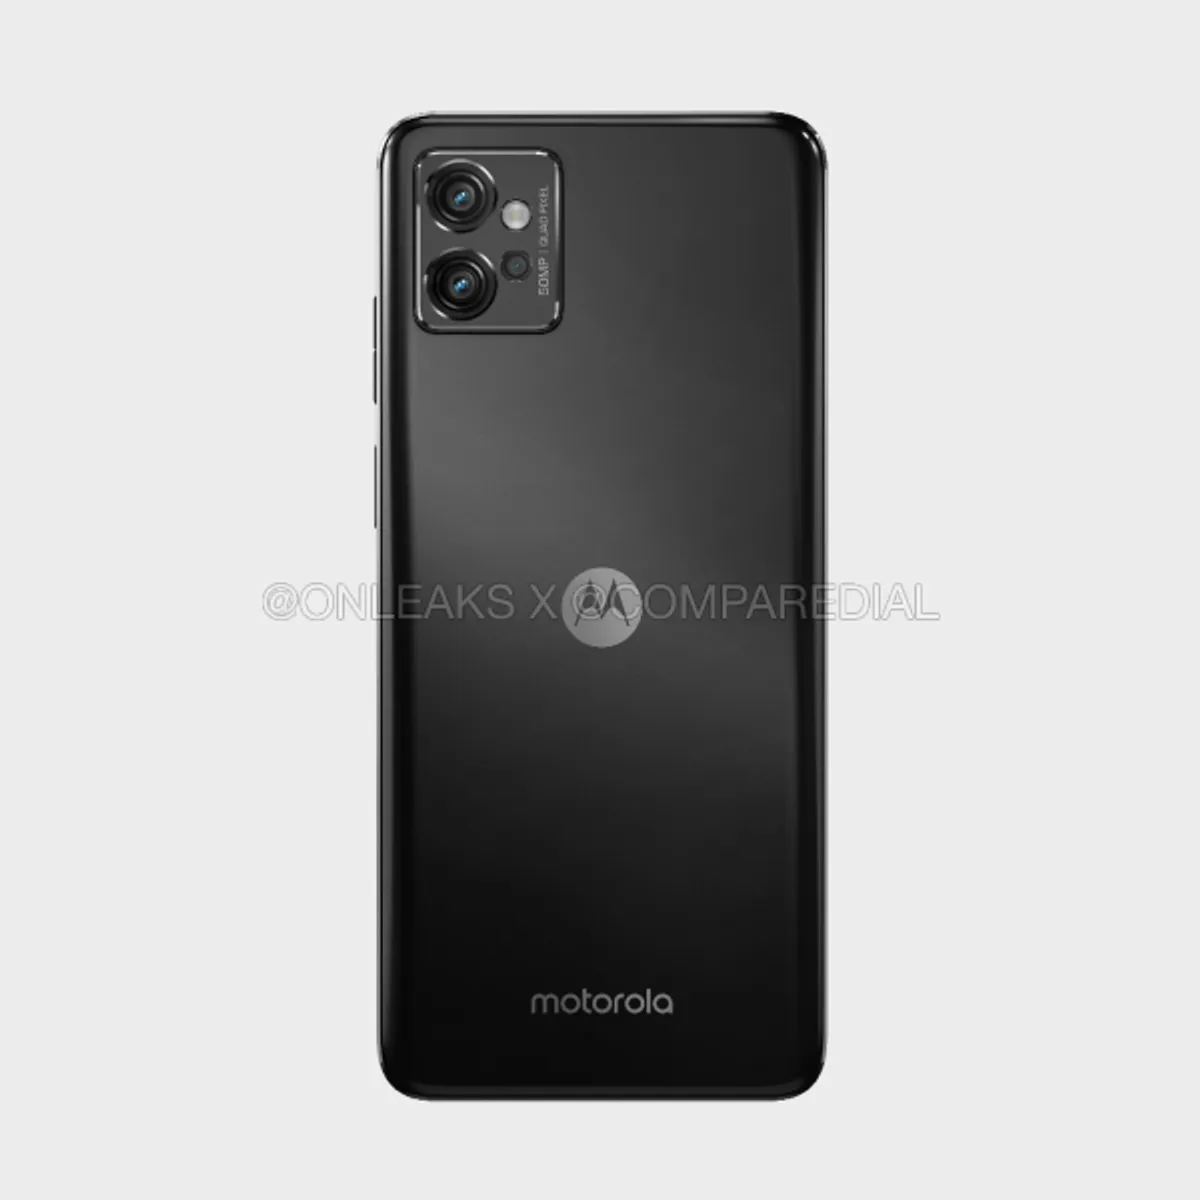  Motorola Moto G32 в двух расцветках на фото Другие устройства  - motorola_moto_g32_v_dvuh_cvetah_na_press_foto_3